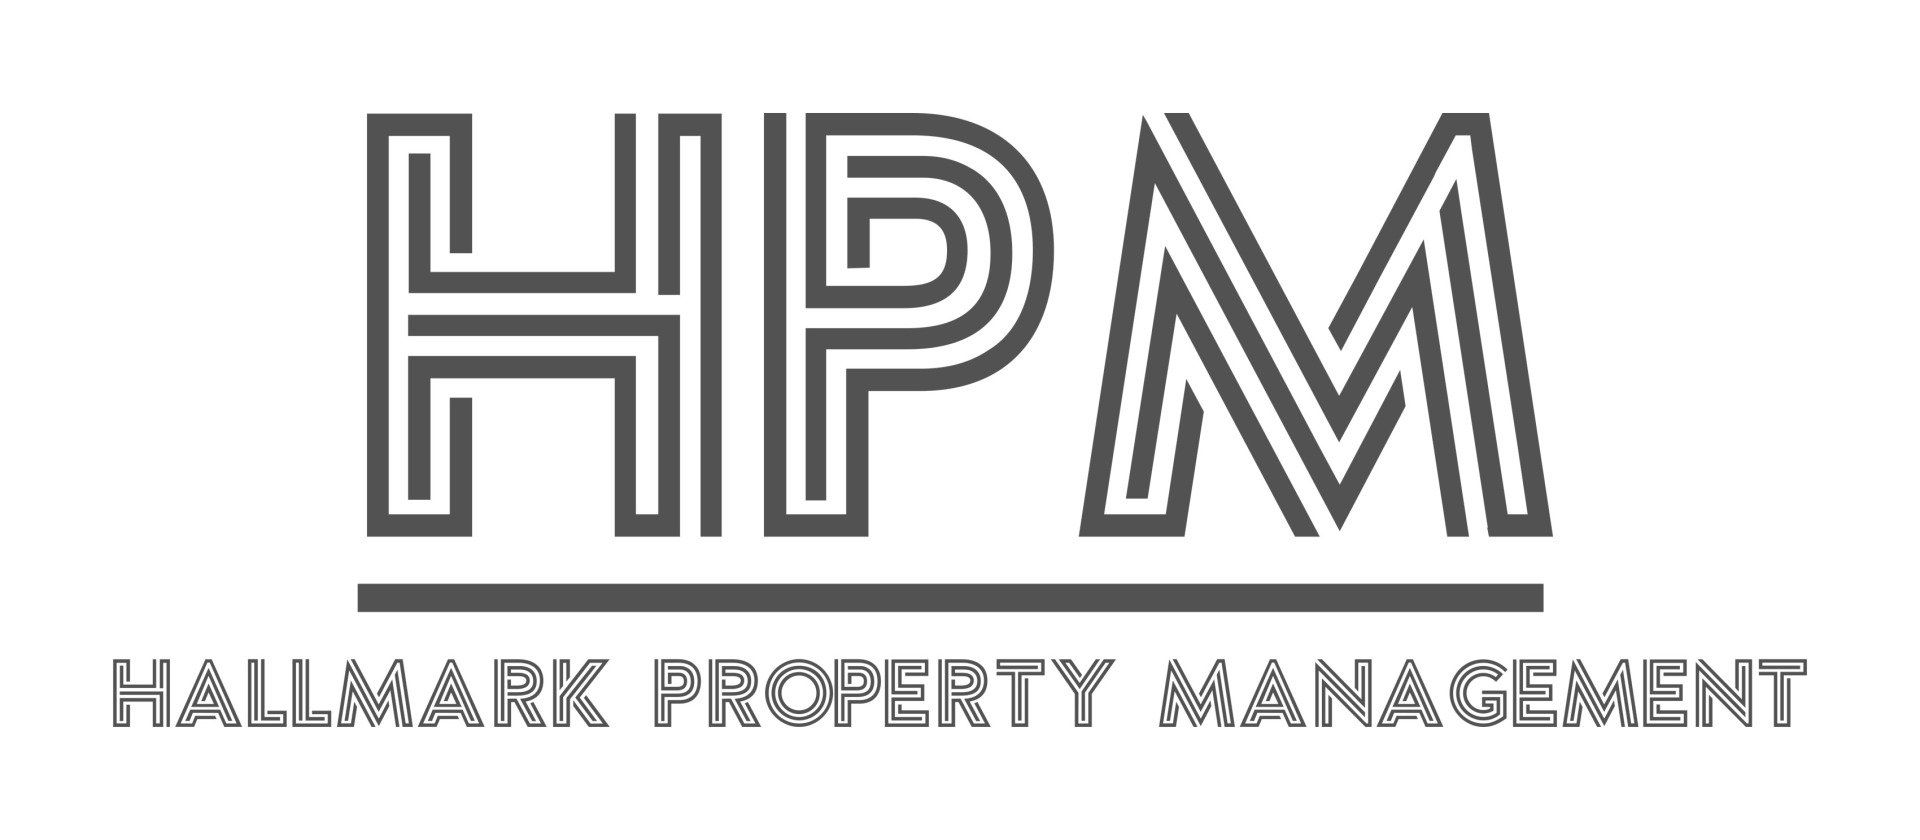 Hallmark Property Management Logo